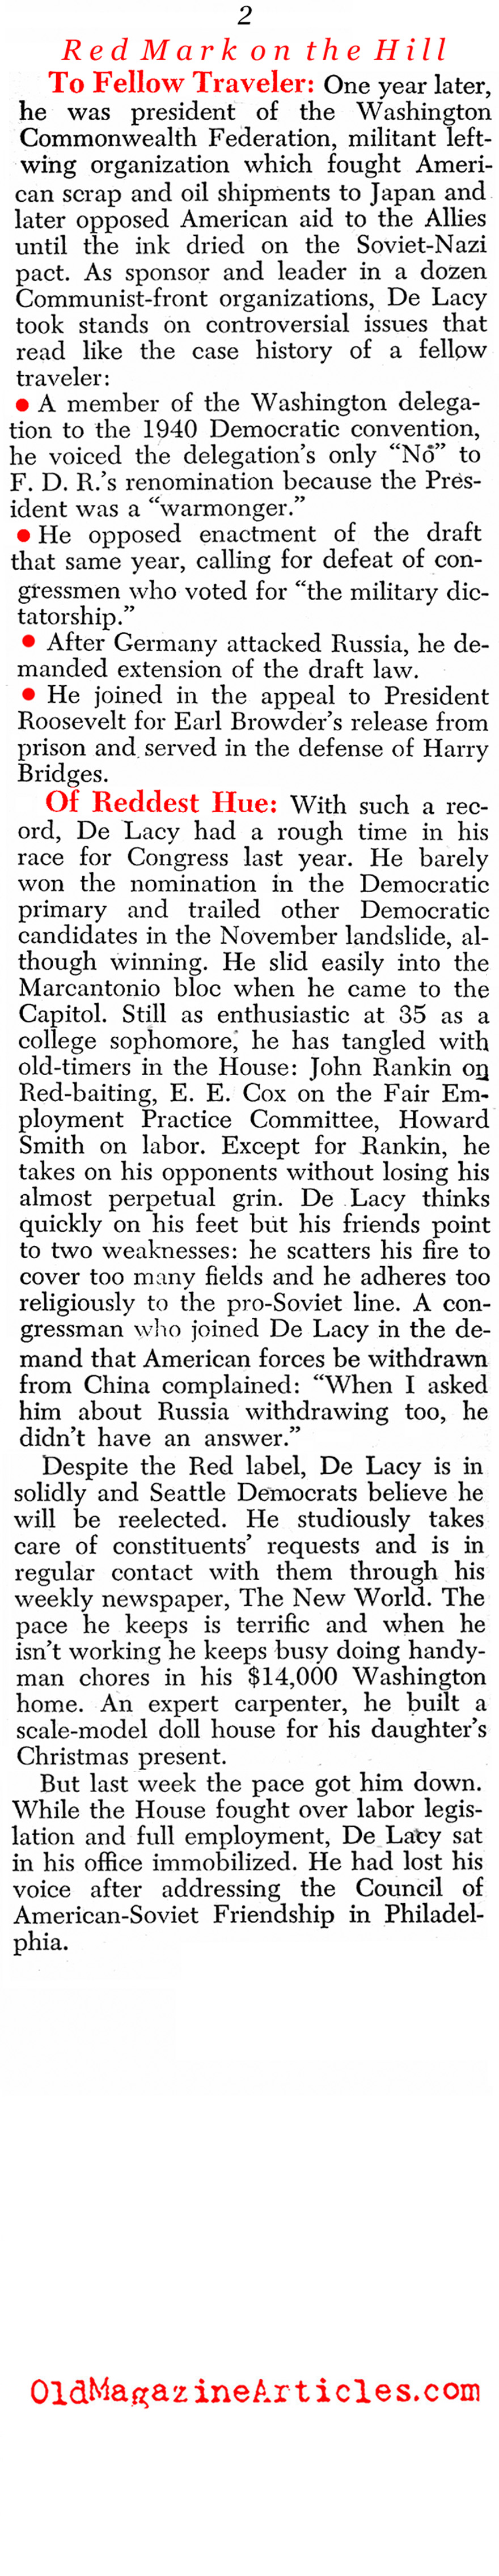 The Communist on Capitol Hill (Newsweek Magazine, 1945)